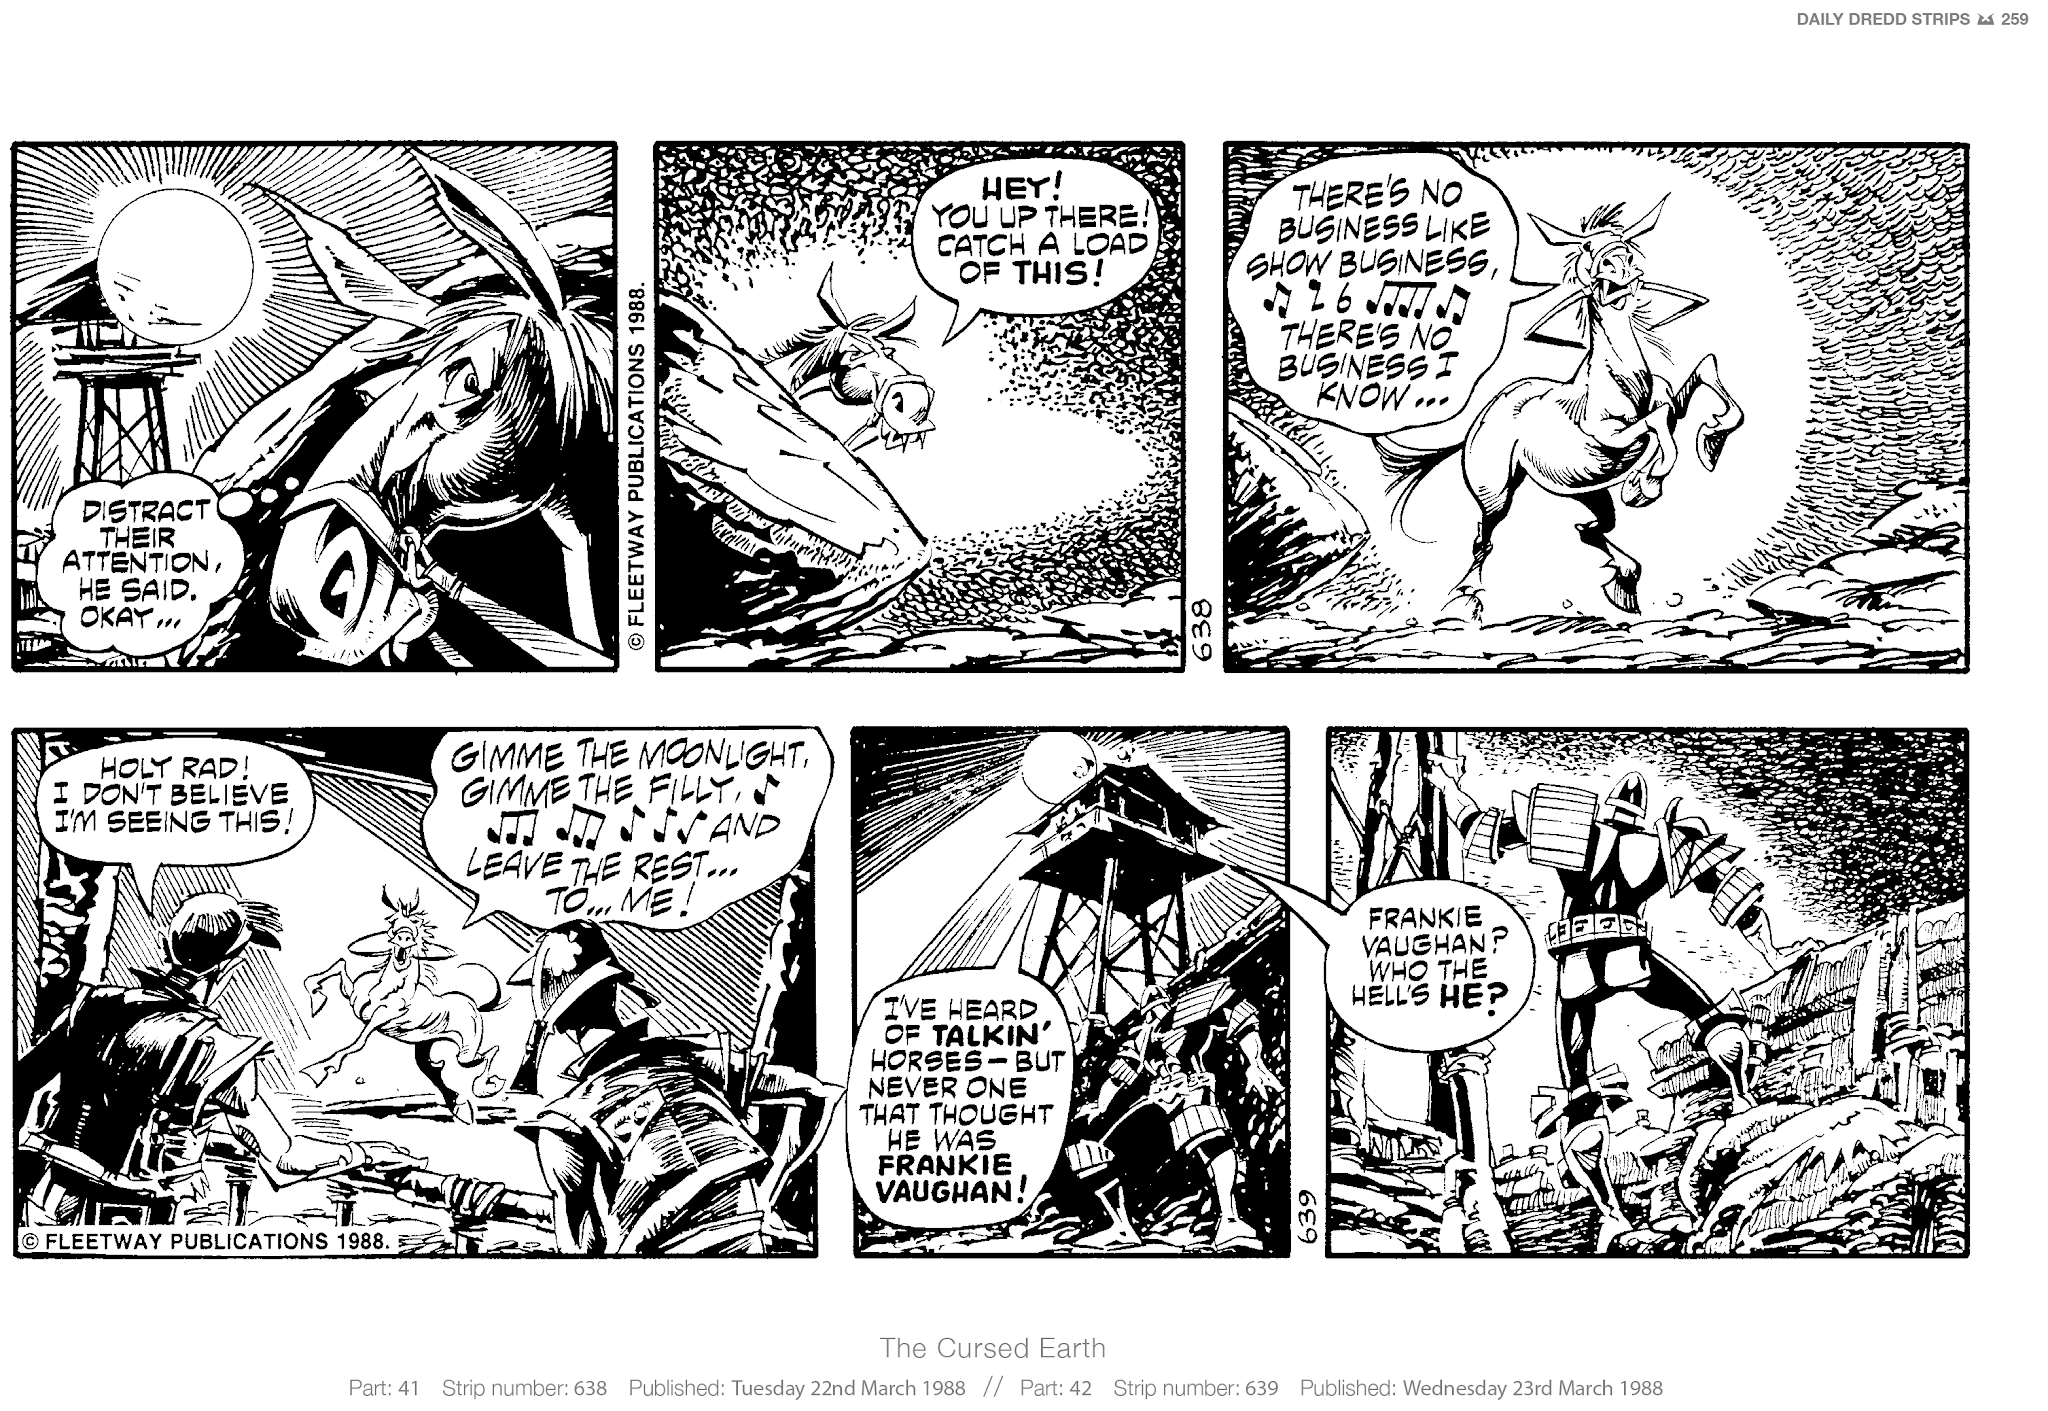 Read online Judge Dredd: The Daily Dredds comic -  Issue # TPB 2 - 262